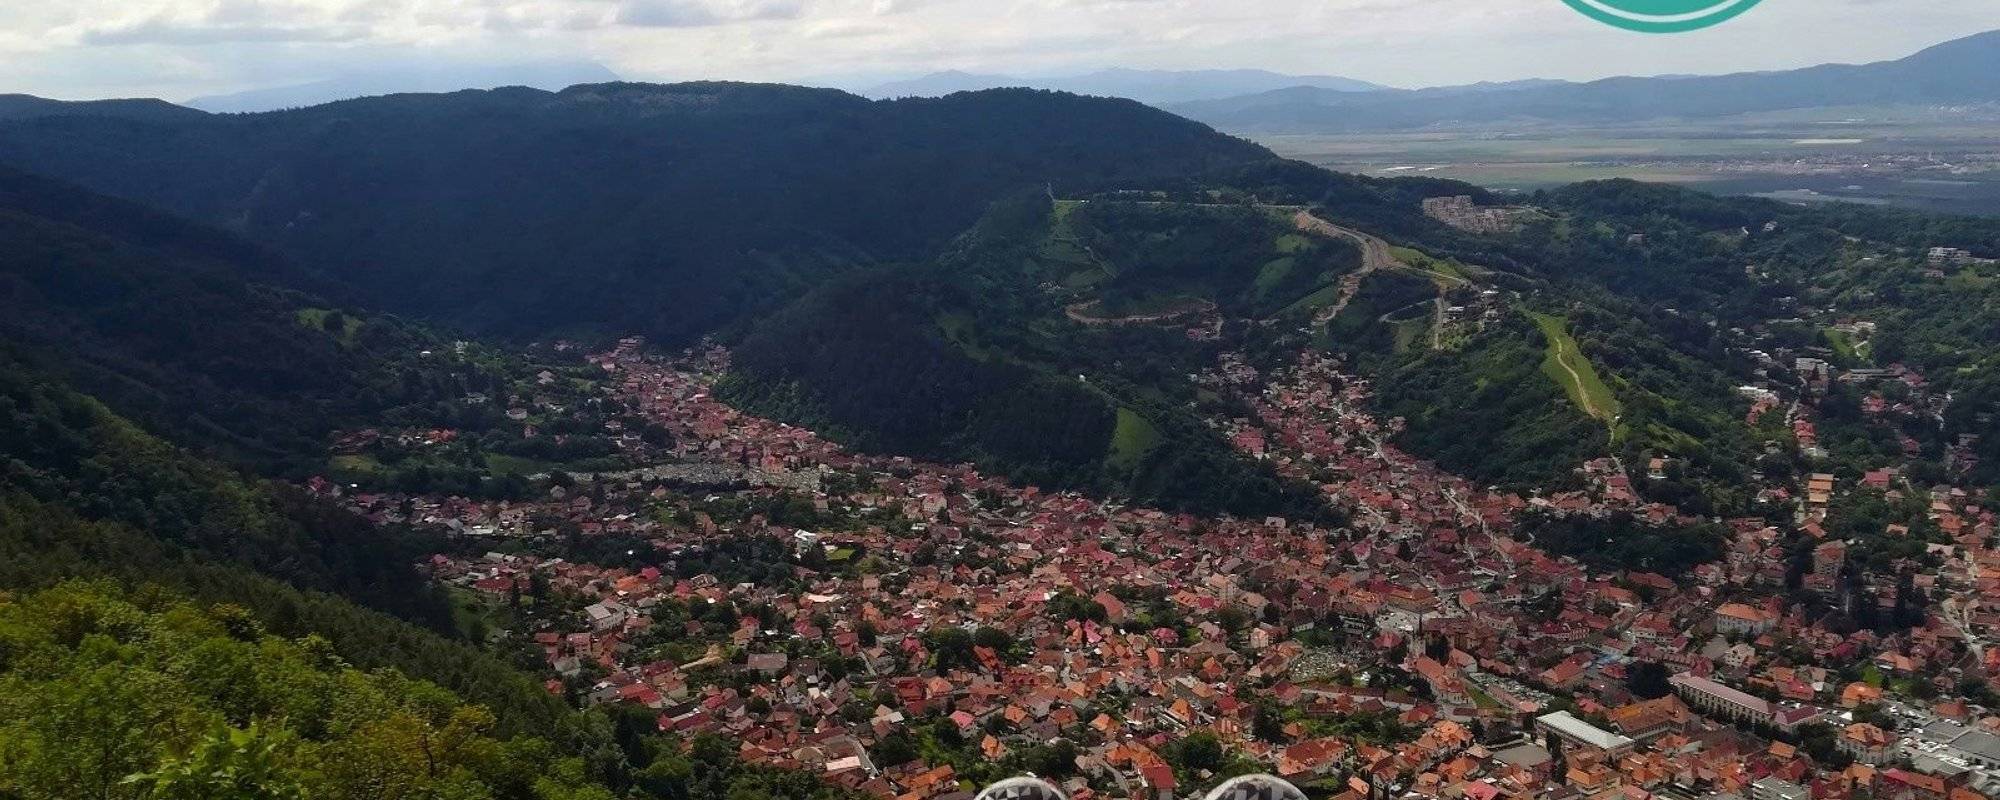 Let's travel together #71 - Tâmpa Peak, Brașov (Vârful Tâmpa, Brașov)